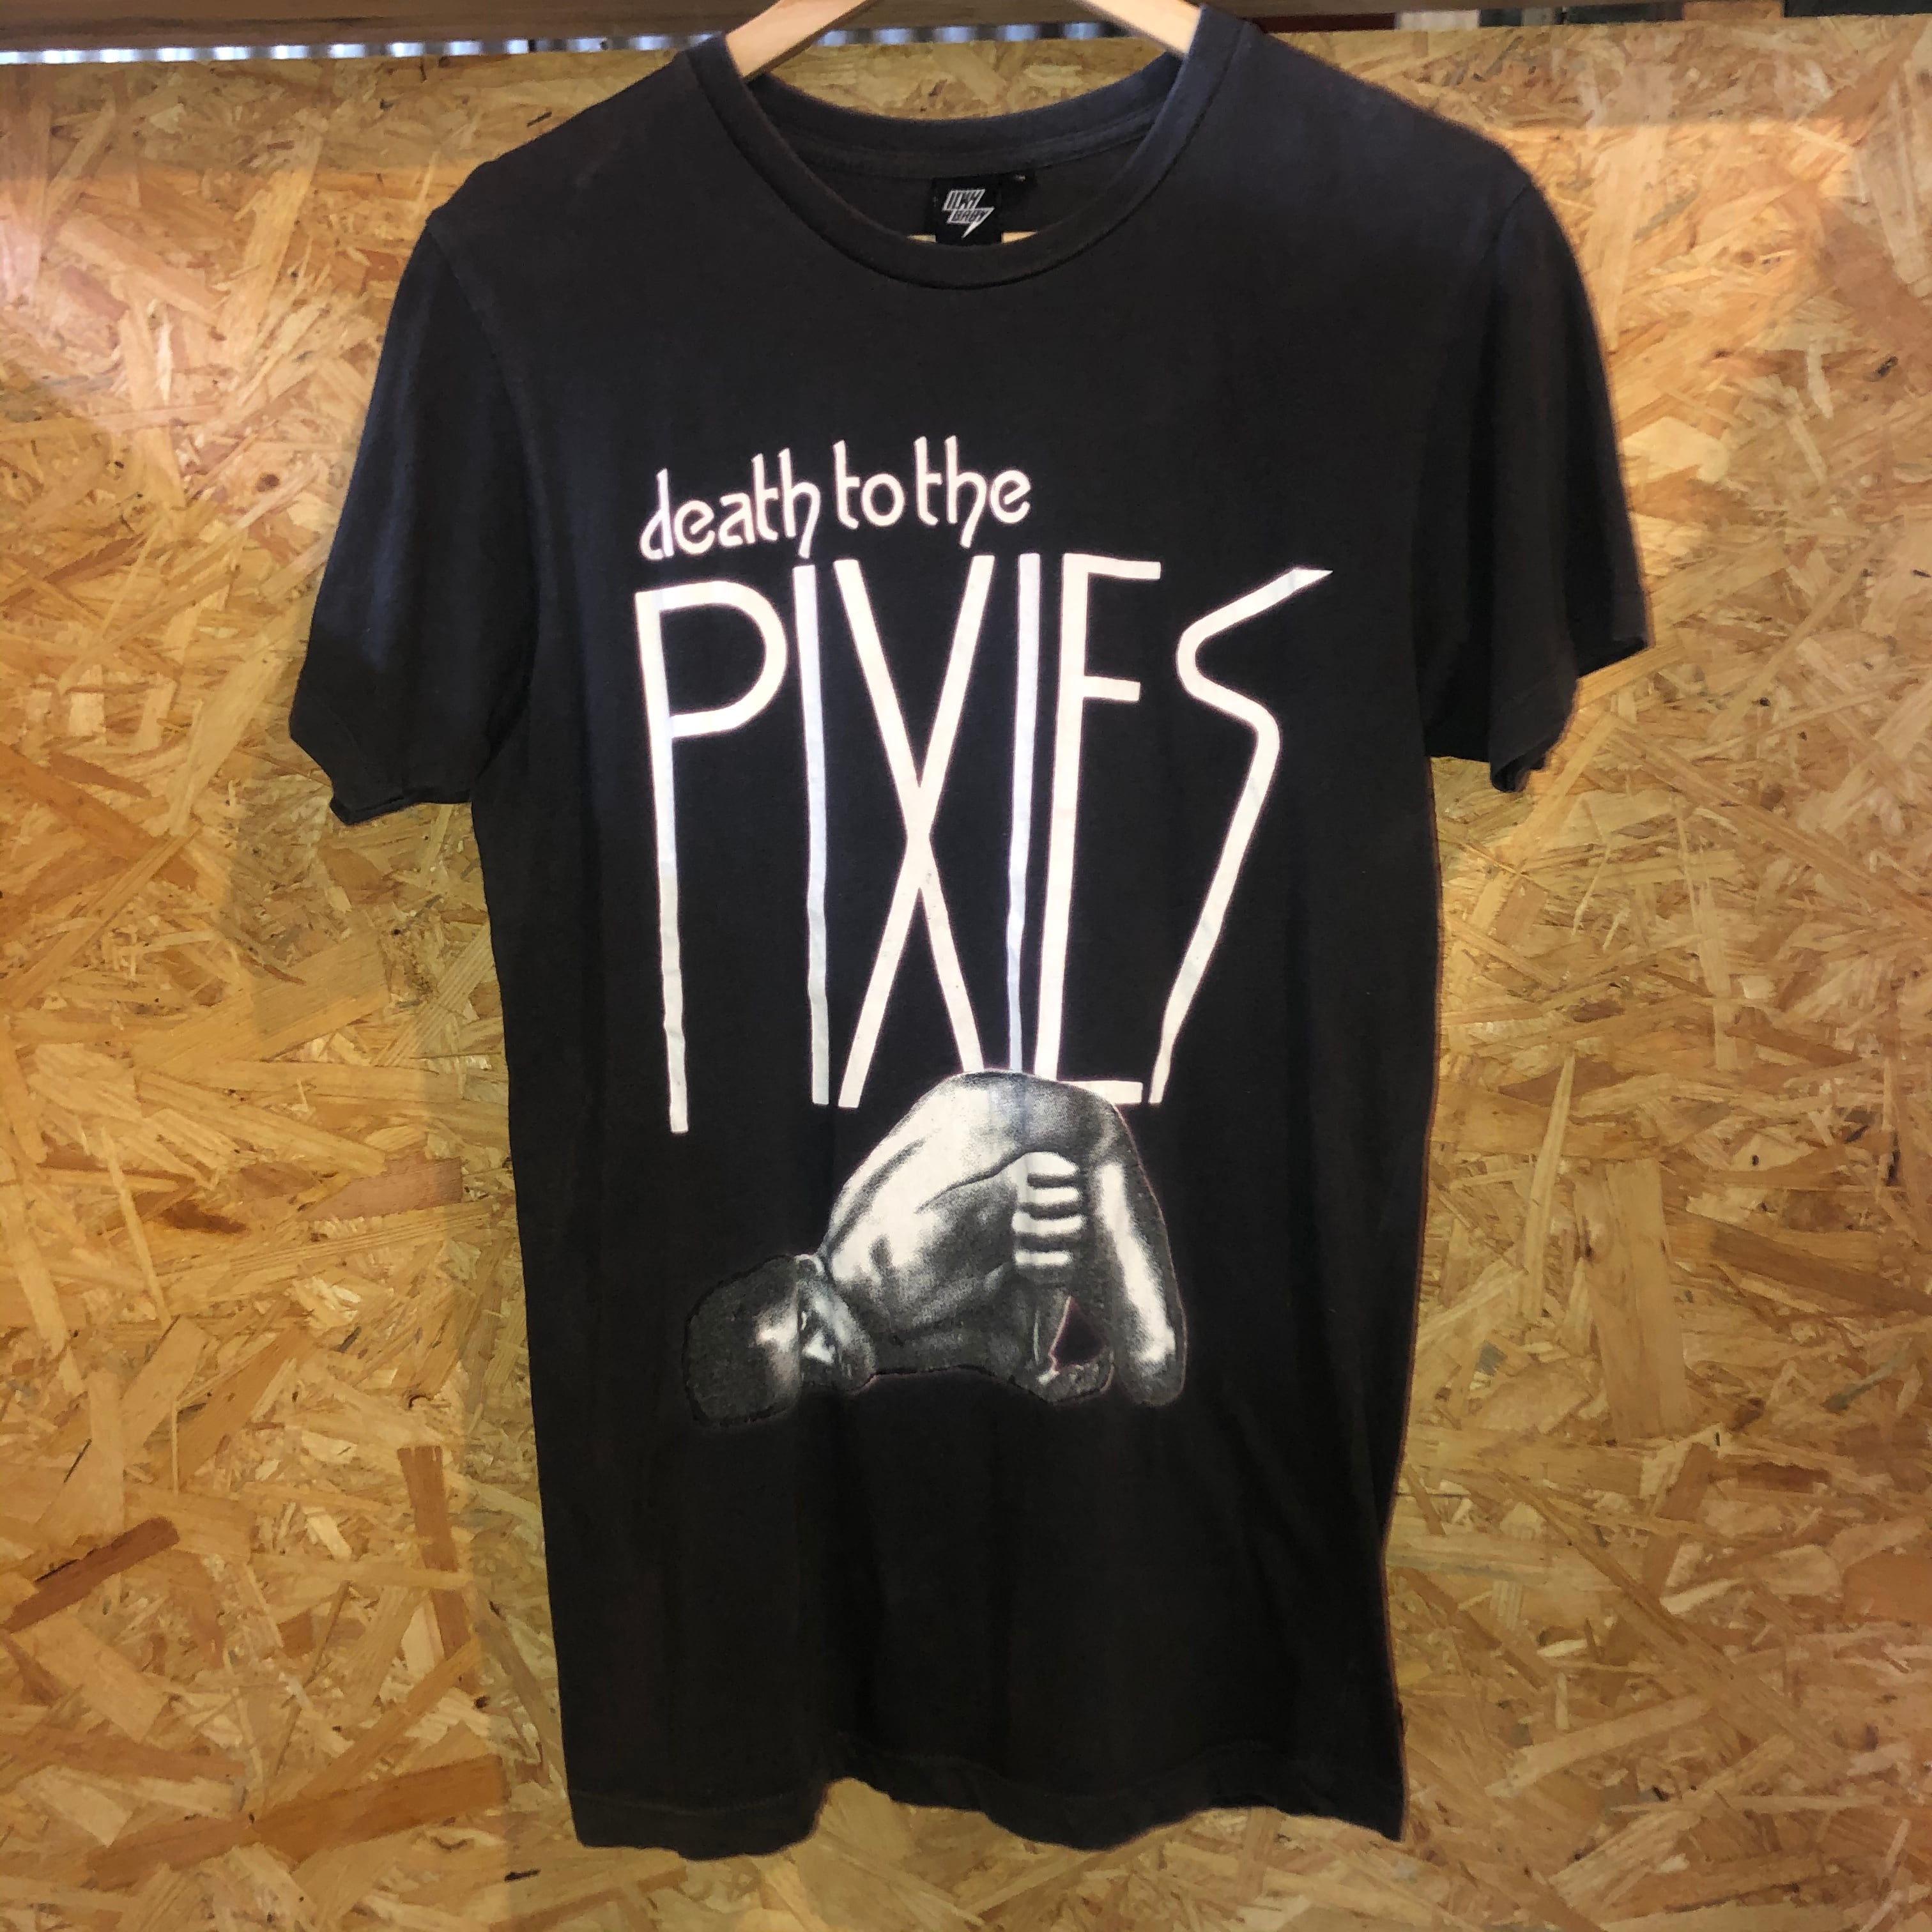 Vintage Rock Item ヴィンテージ ロック 00s PIXIES Death To The Pixies ピクシーズ クルーネック 半袖 Tシャツ ブラック 黒 M トップス カットソー バンドT ロックT 【メンズ】